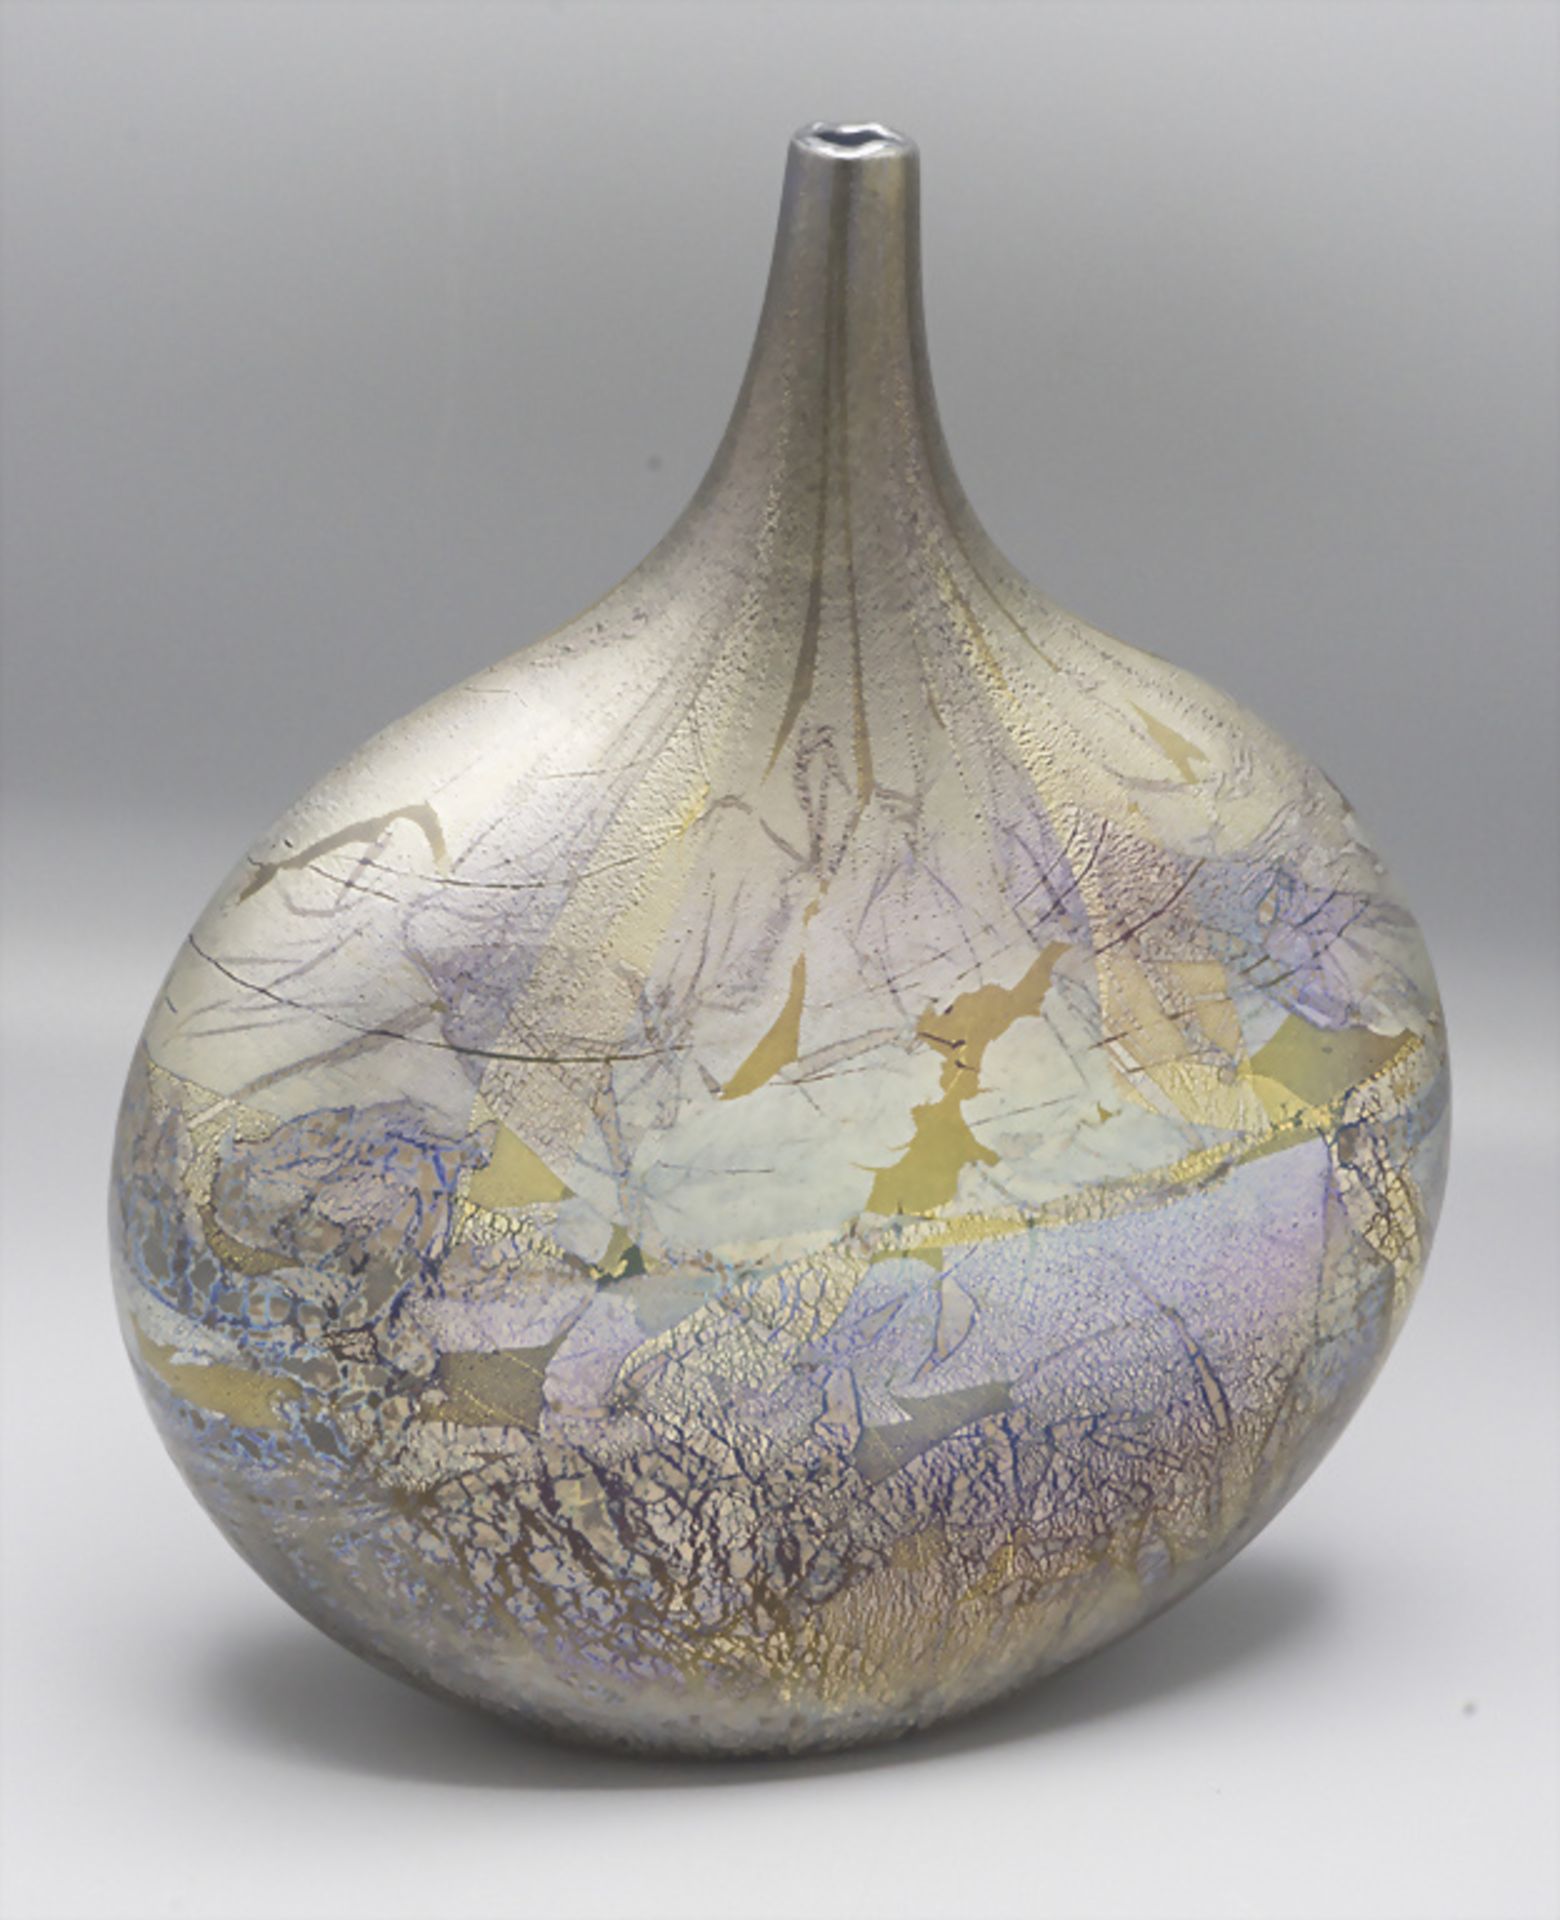 Glasziervase / A glass vase, wohl AVEM (Arte Vetraria Muranese), Murano, 80/90er Jahre